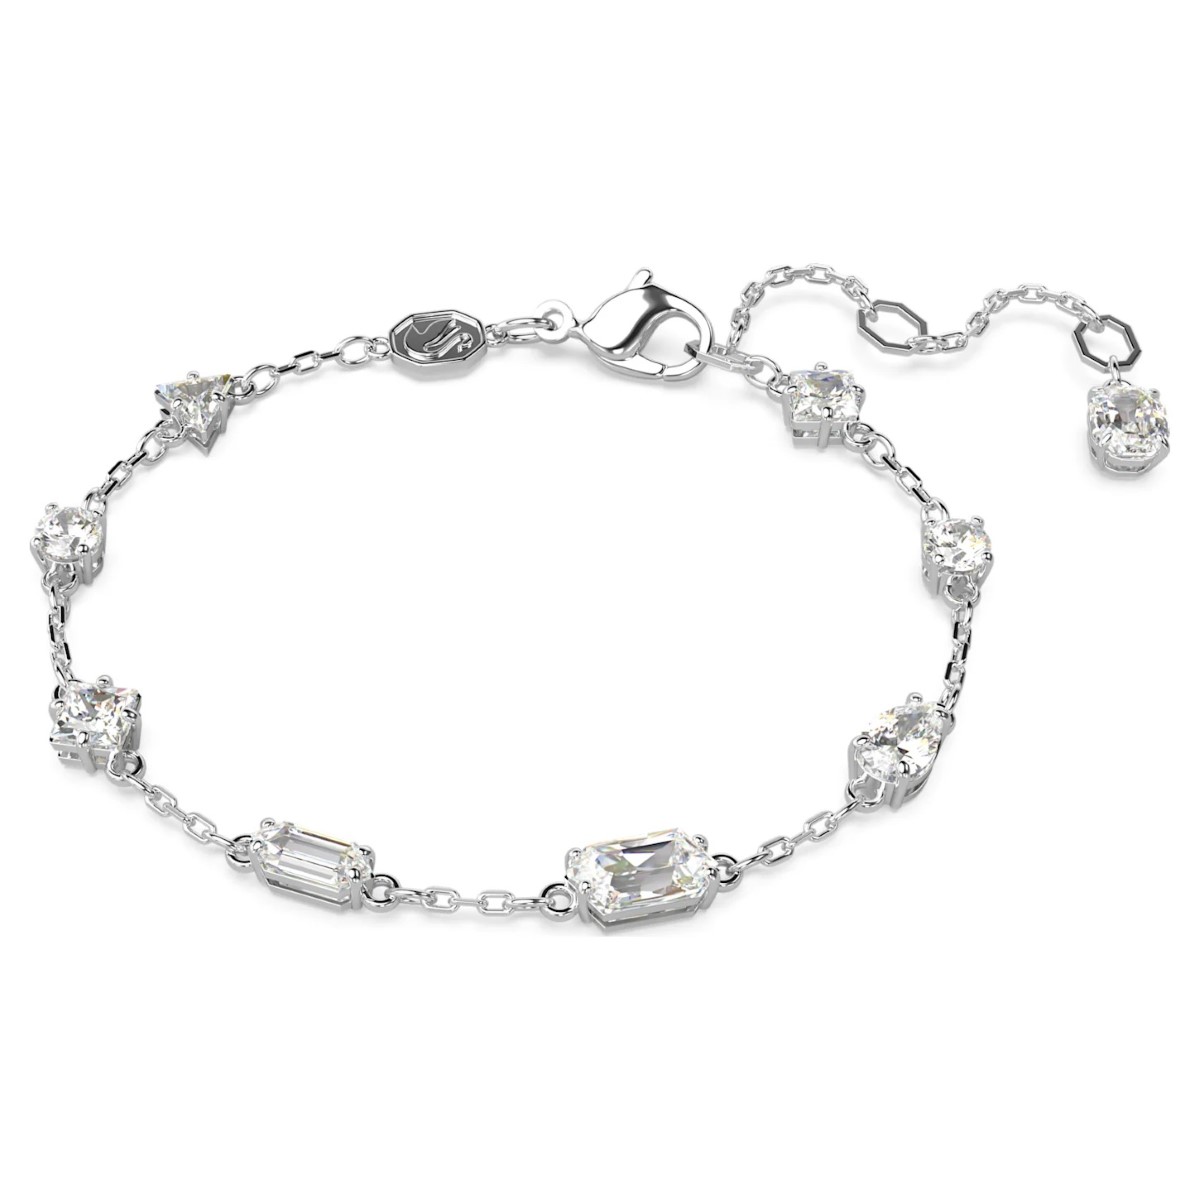 Swarovski Mesmera Bracelet Scattered Design - White with Rhodium Plating 5661530